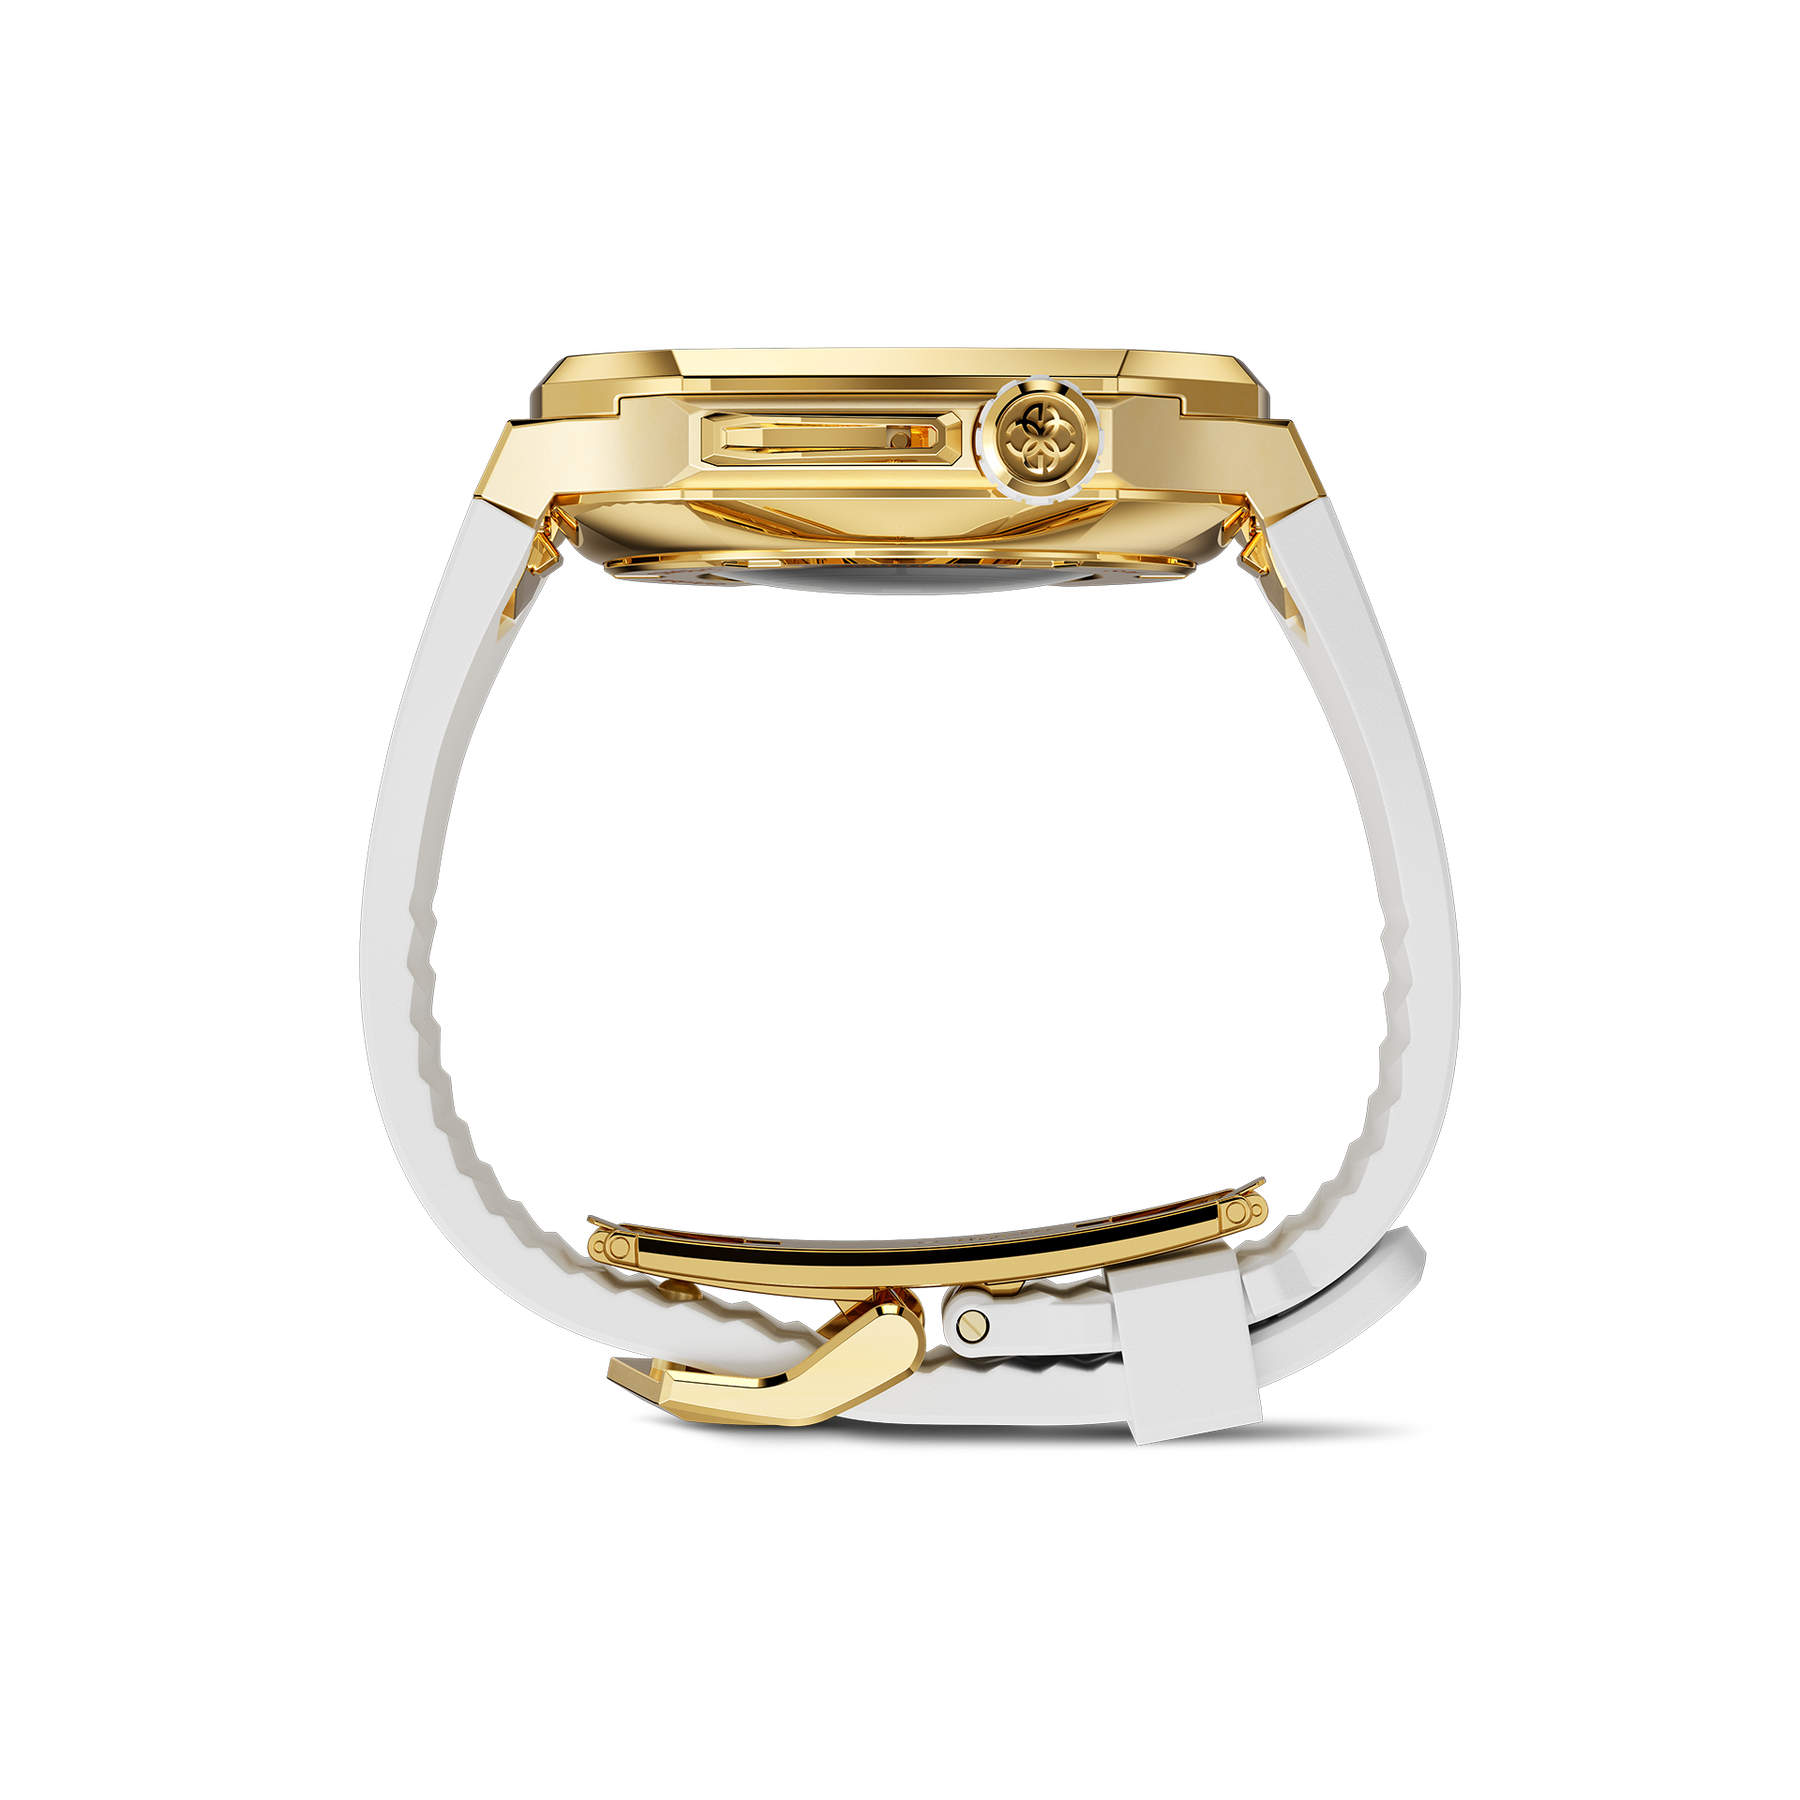 Apple Watch Case SPIII41 - Gold